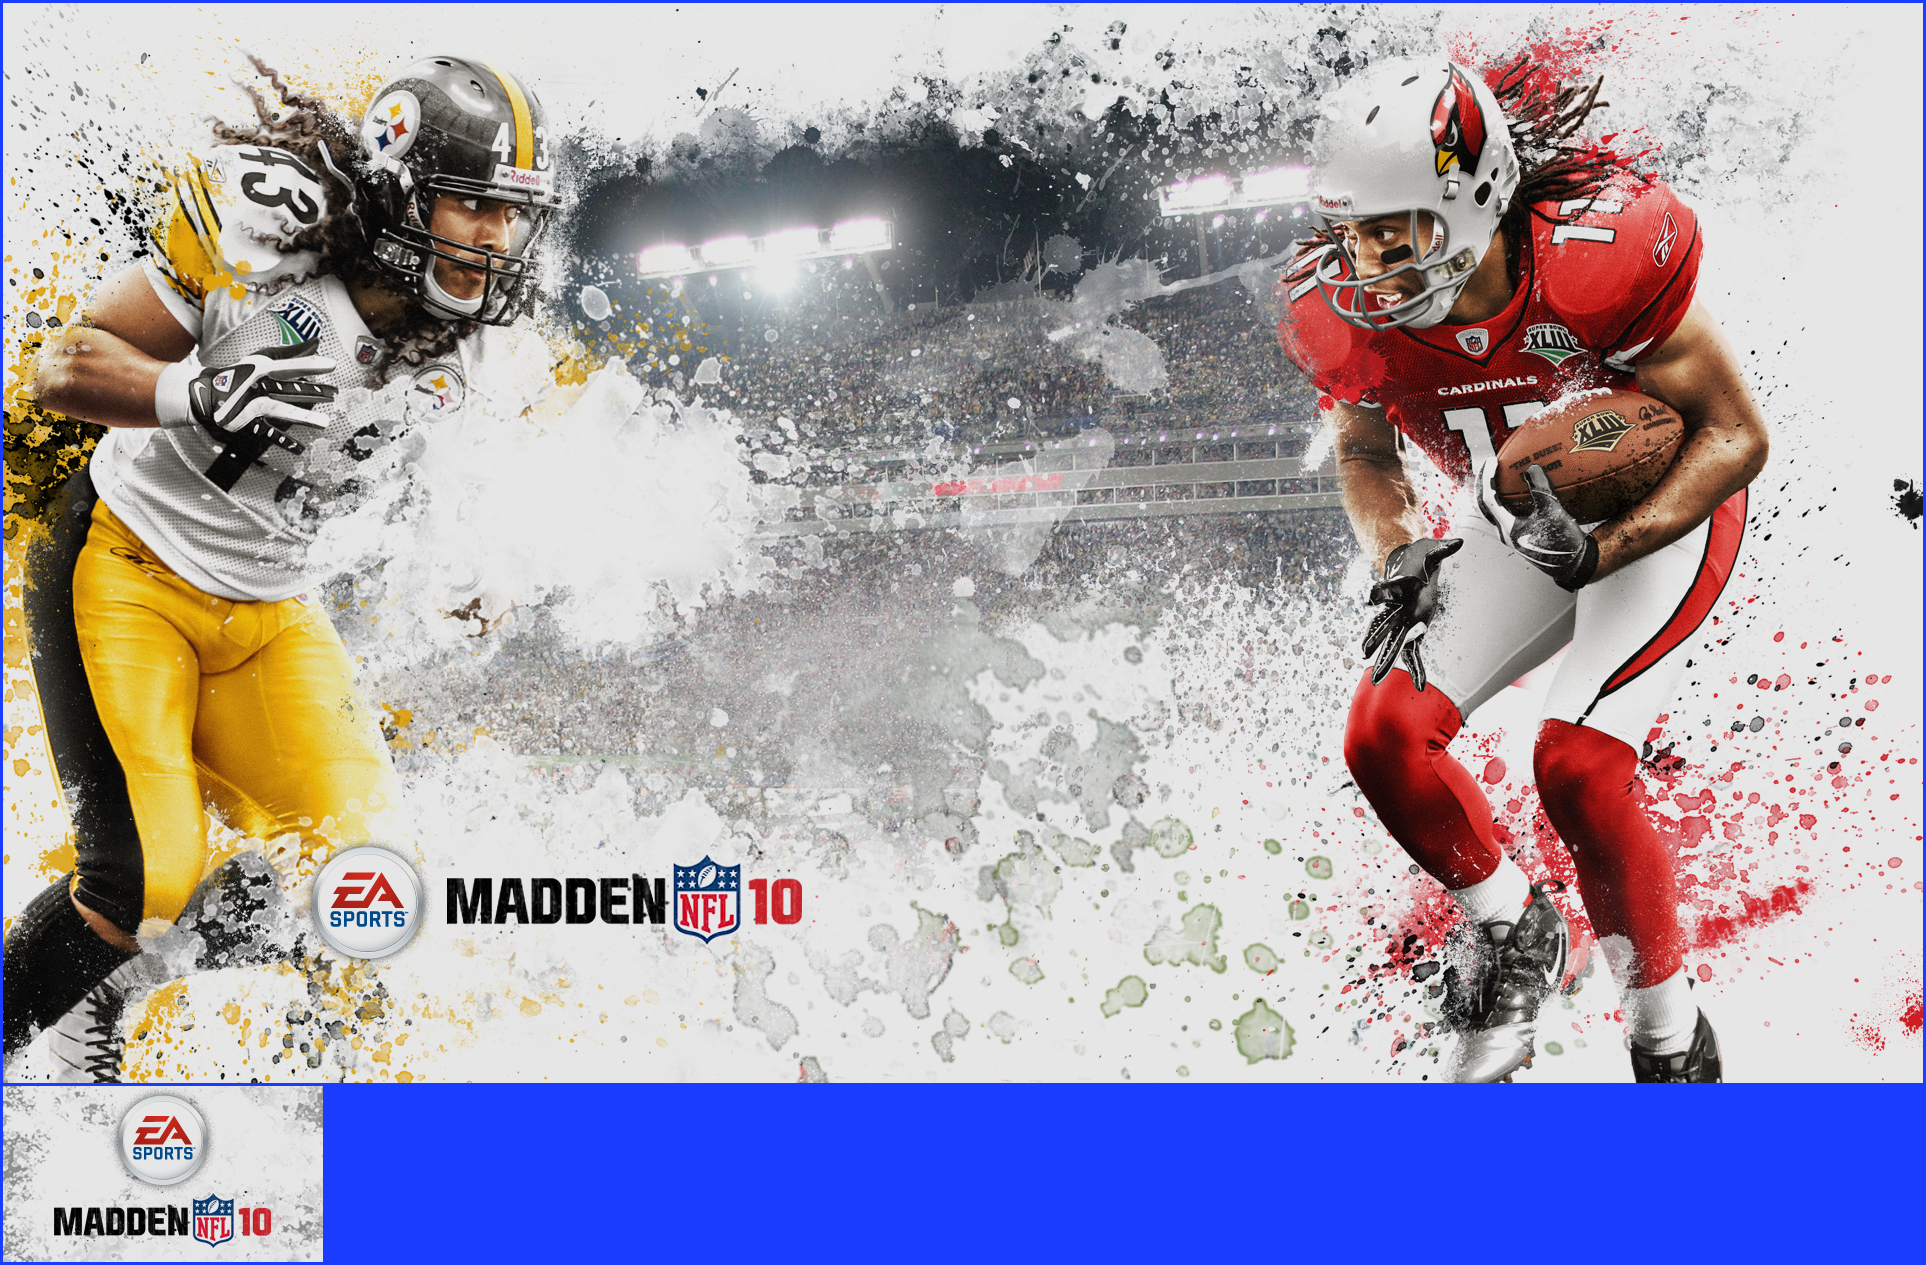 Madden NFL 10 - Game Banner & Icon